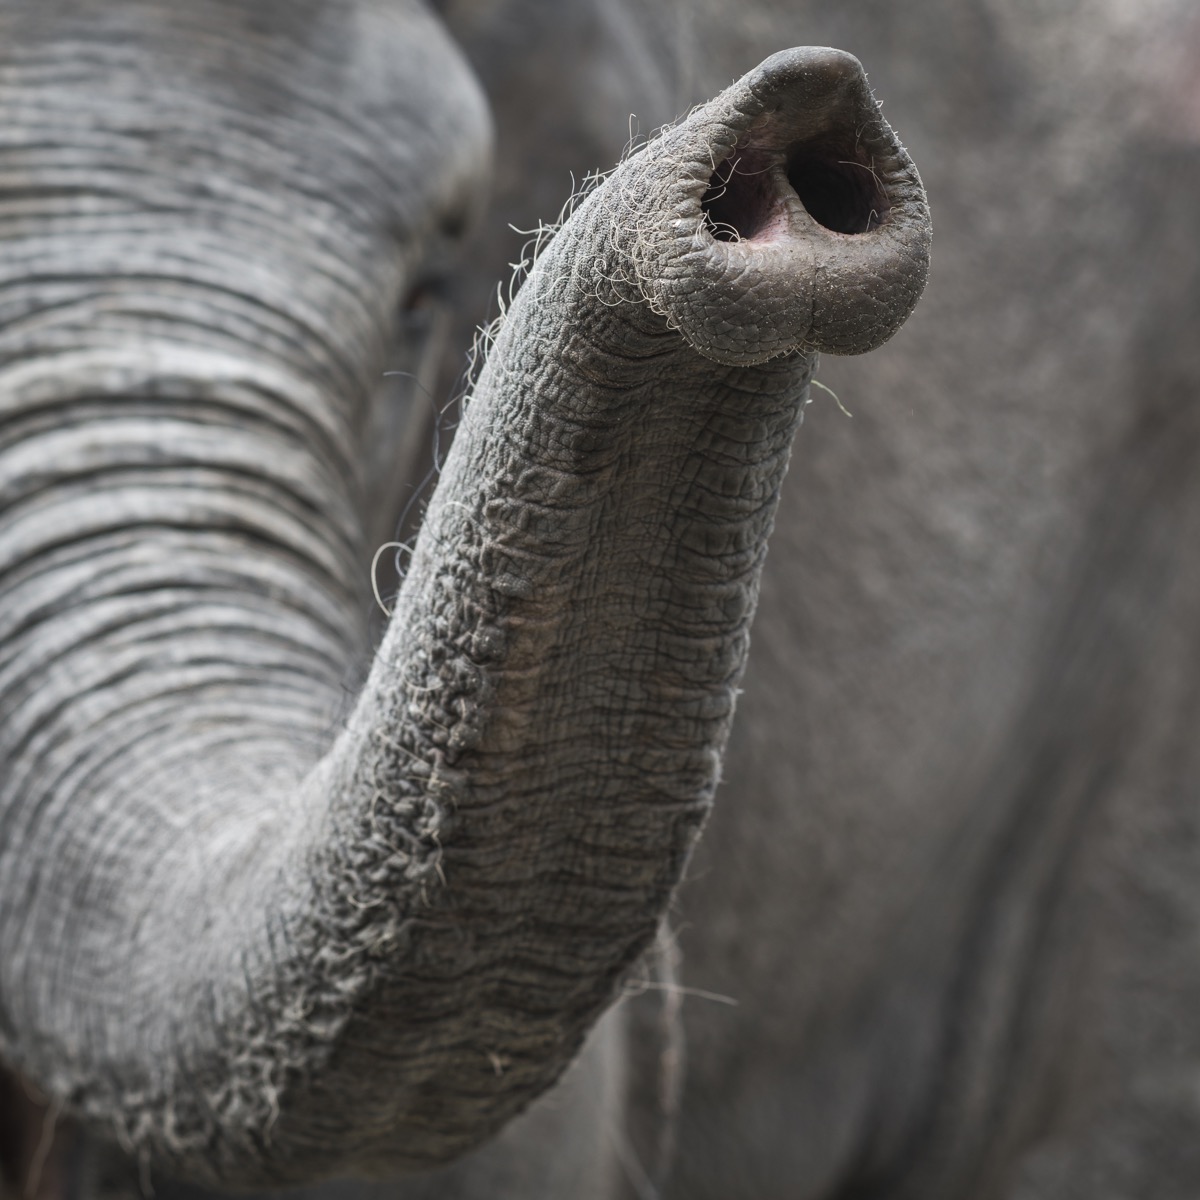 elephant trunk up close